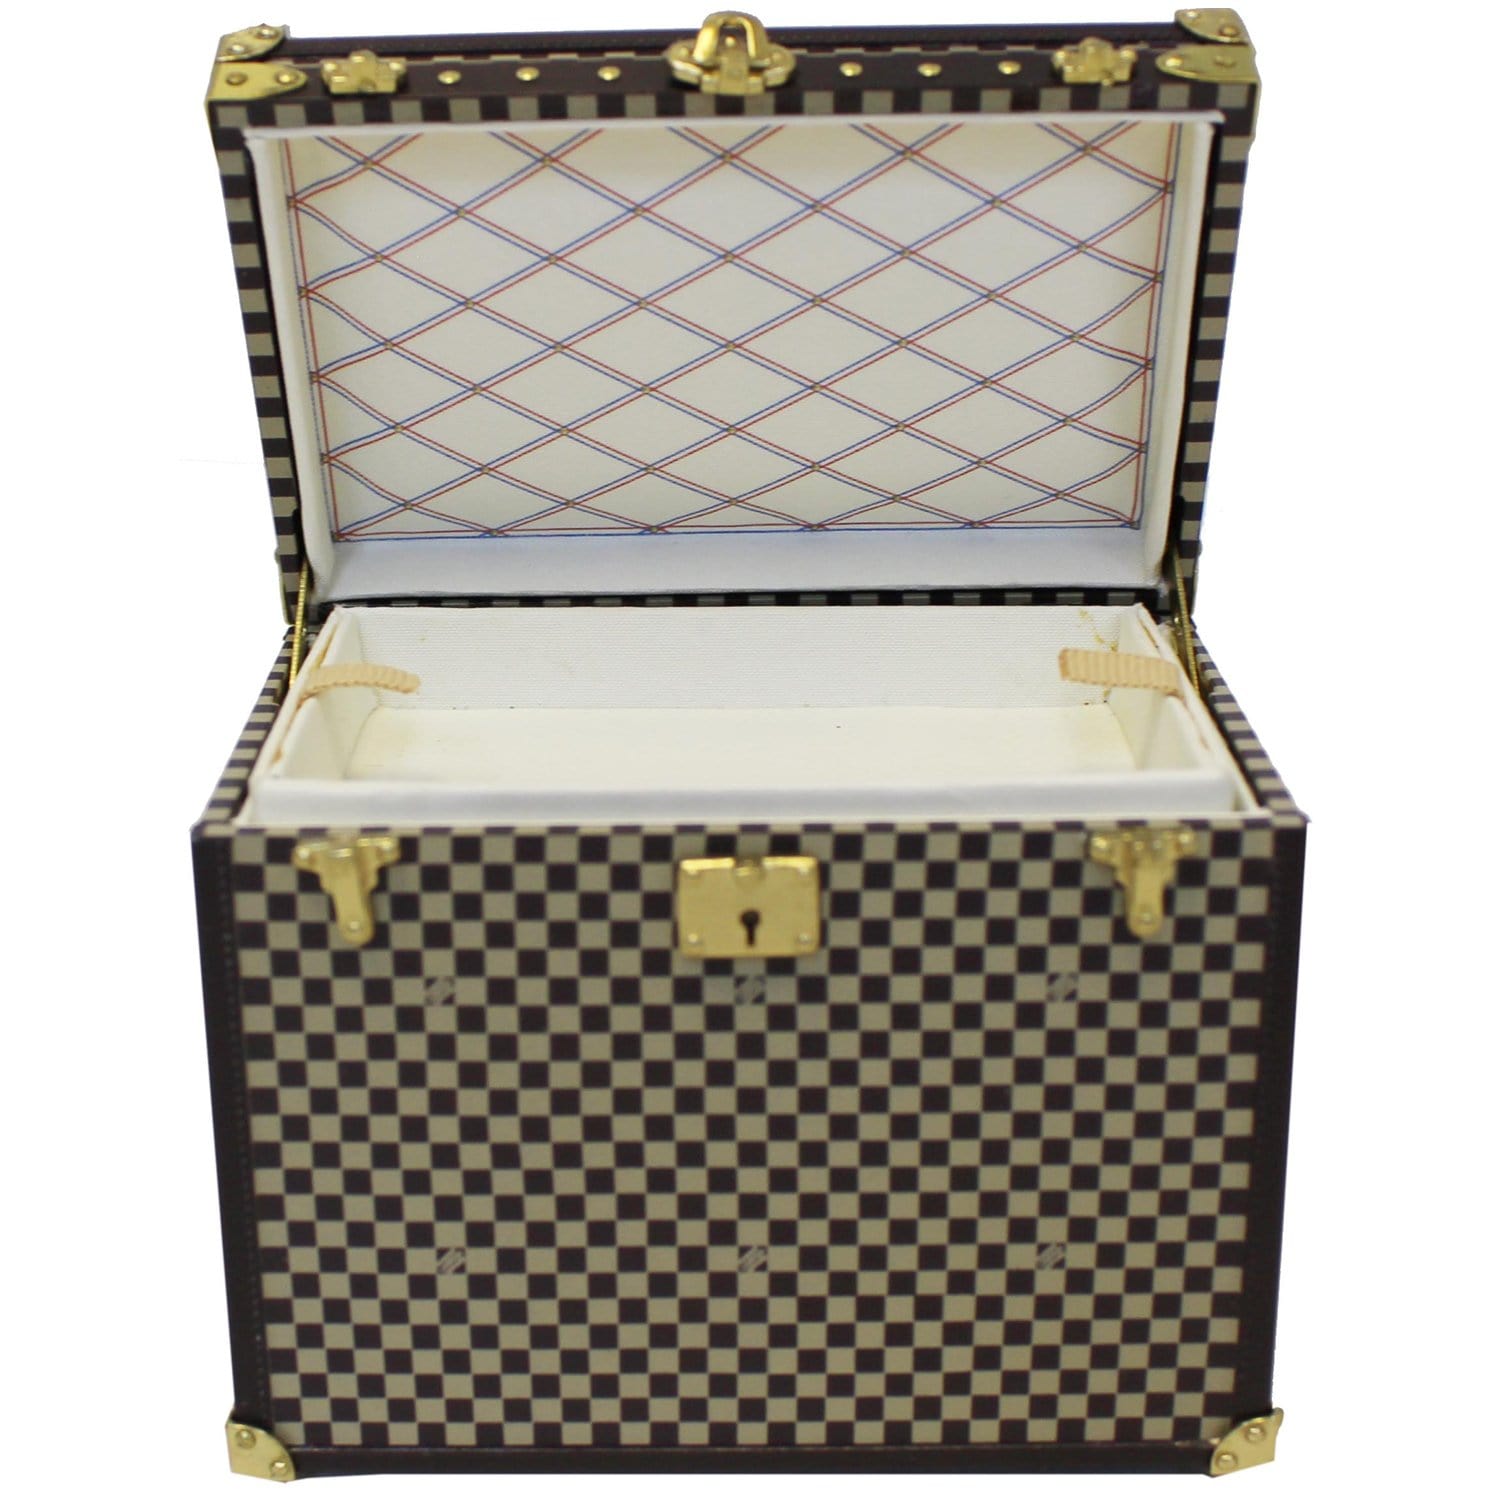 Malle à Damiers Louis Vuitton / Louis Vuitton checkerboard trunk